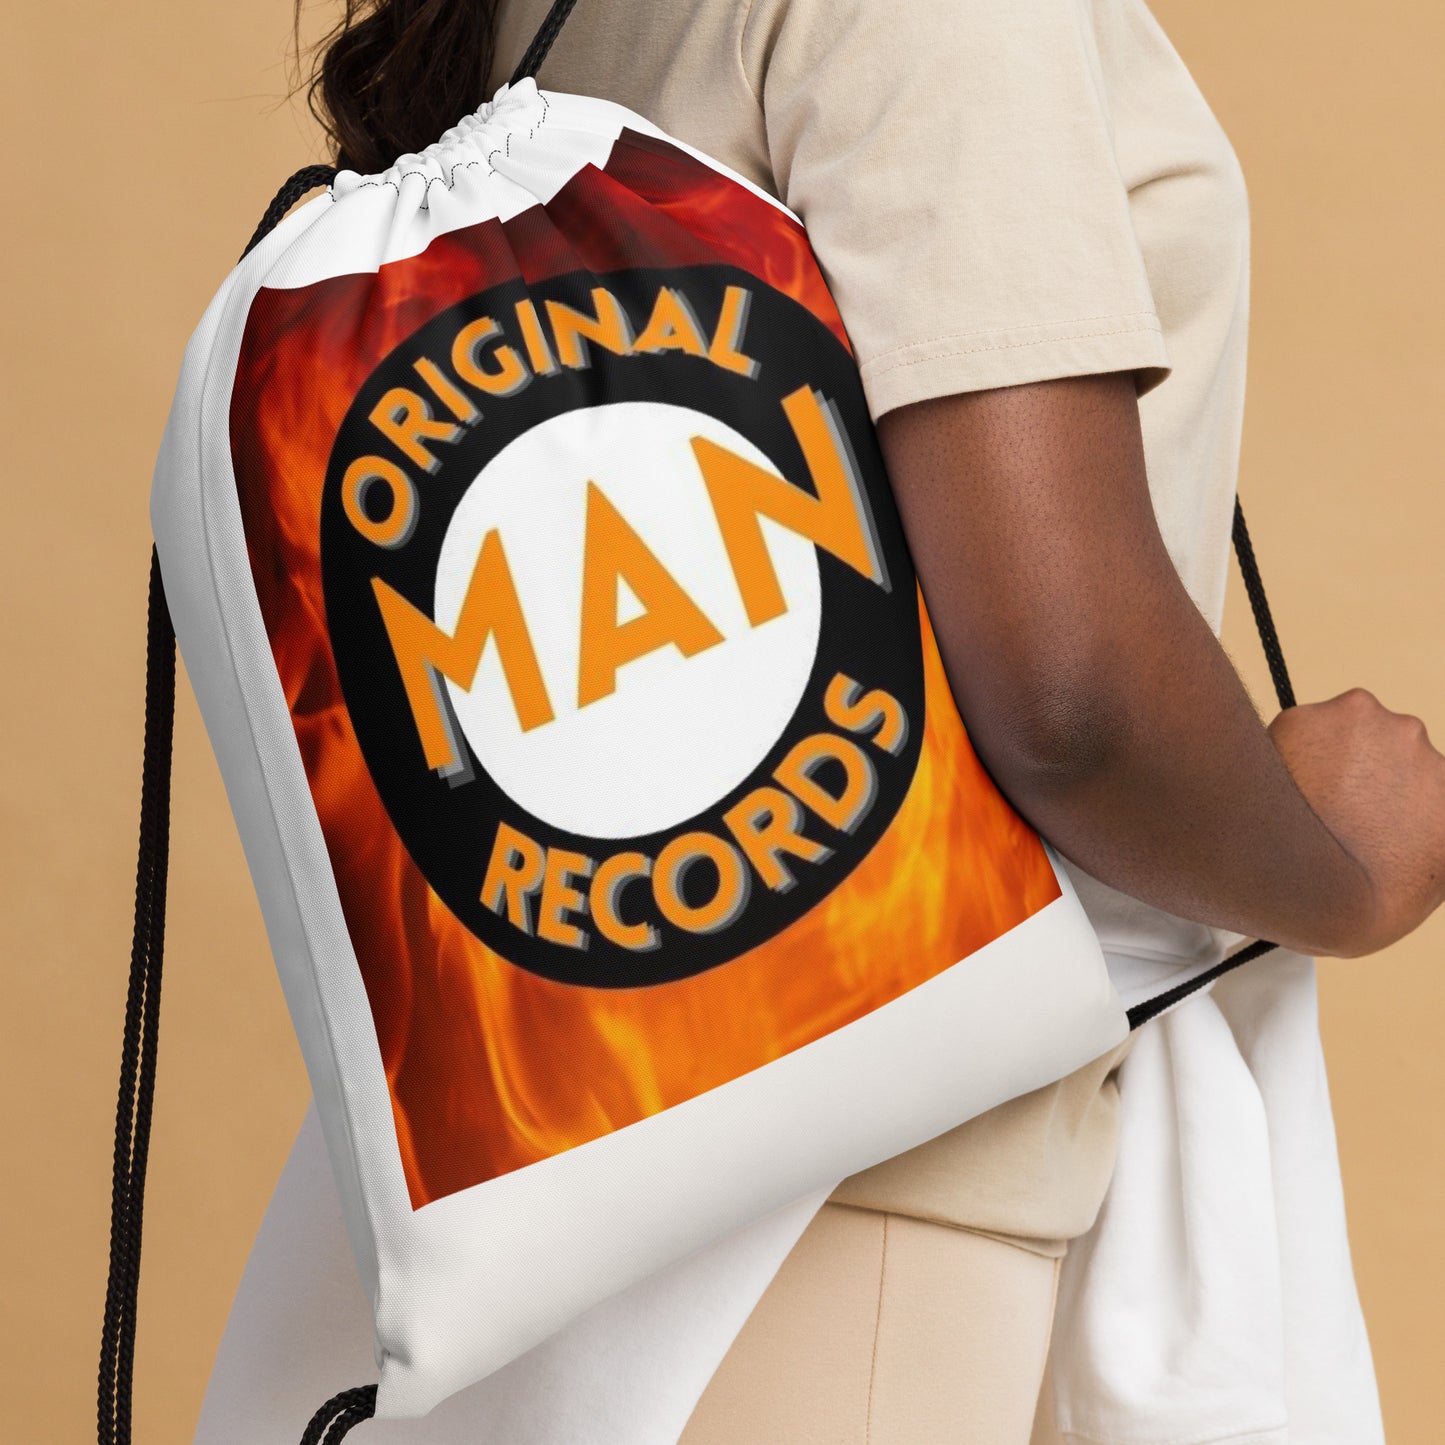 Original Man Records Drawstring bag